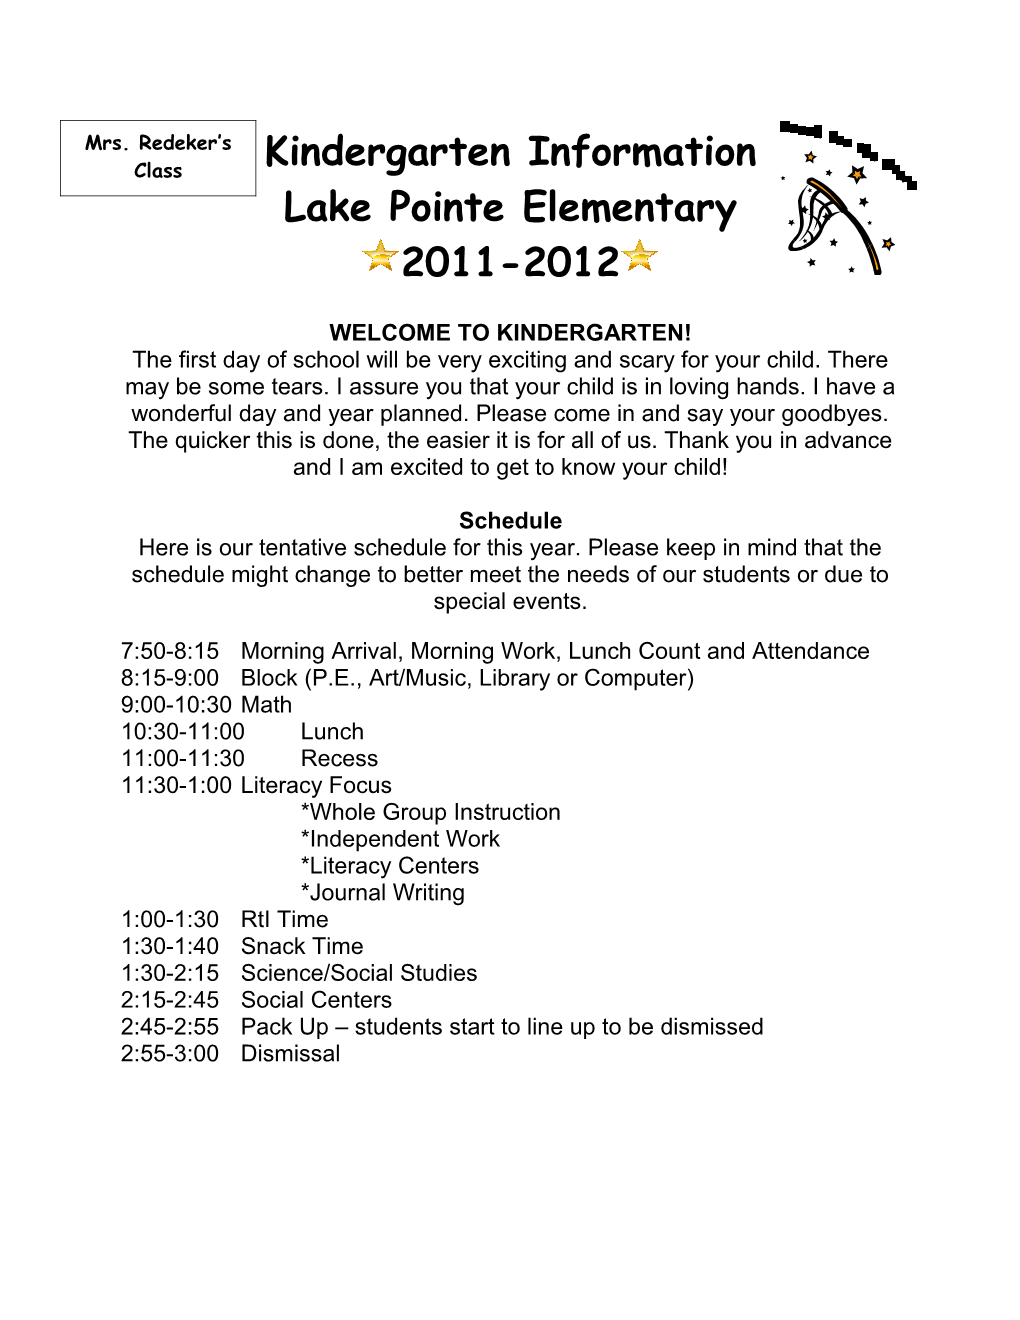 Lakepointe Elementary